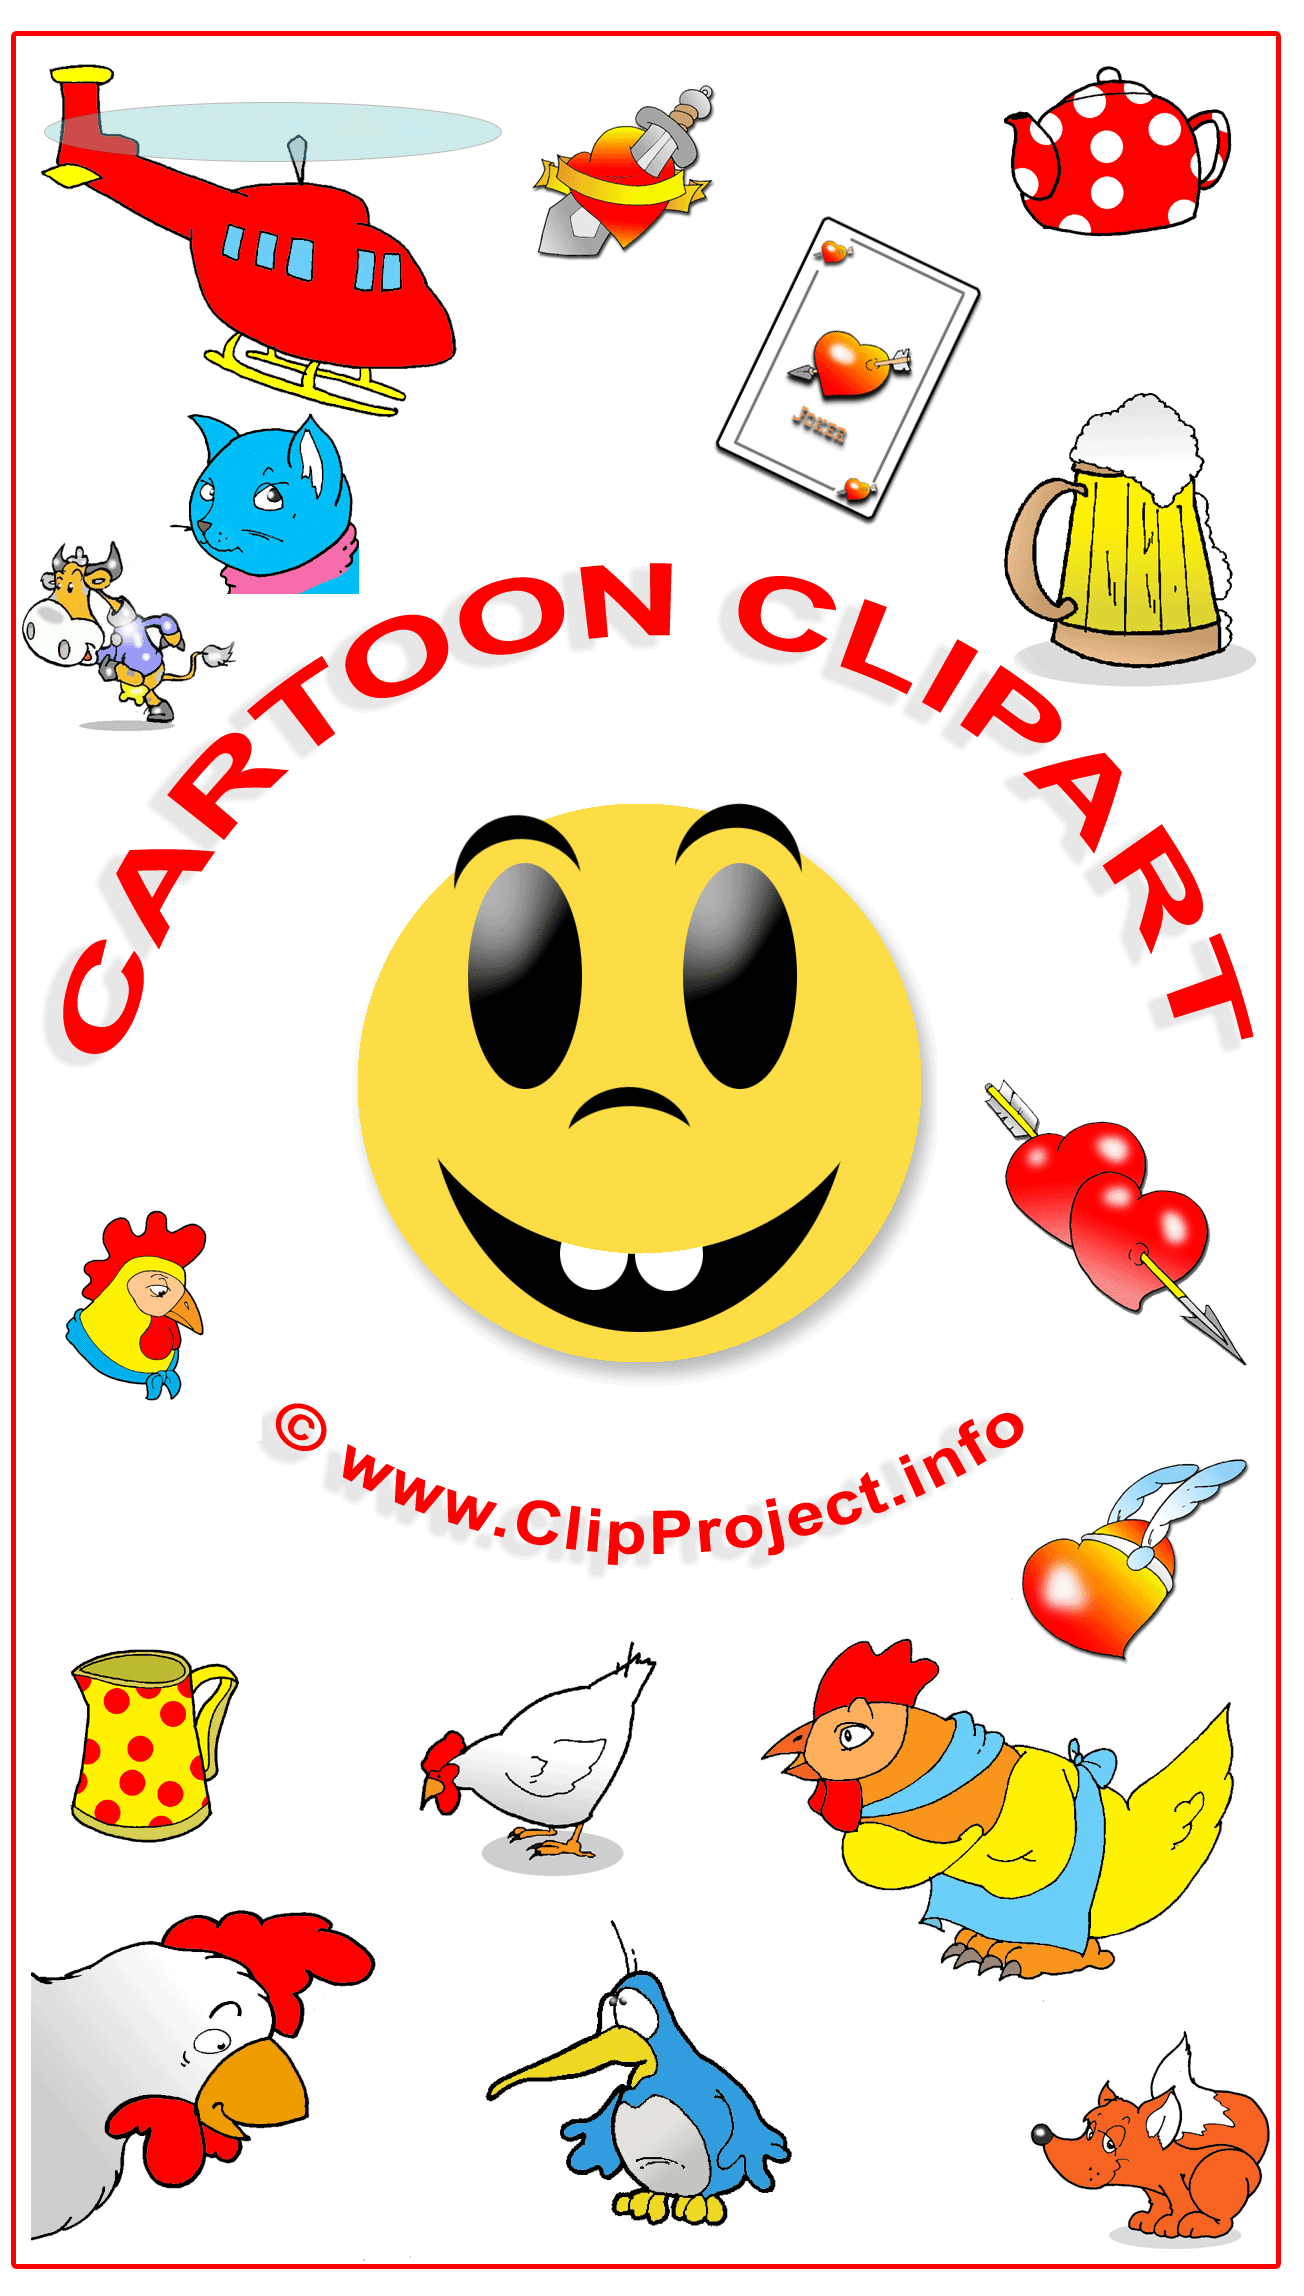 Clipart Cartoons Poster herunterladen online kostenlos